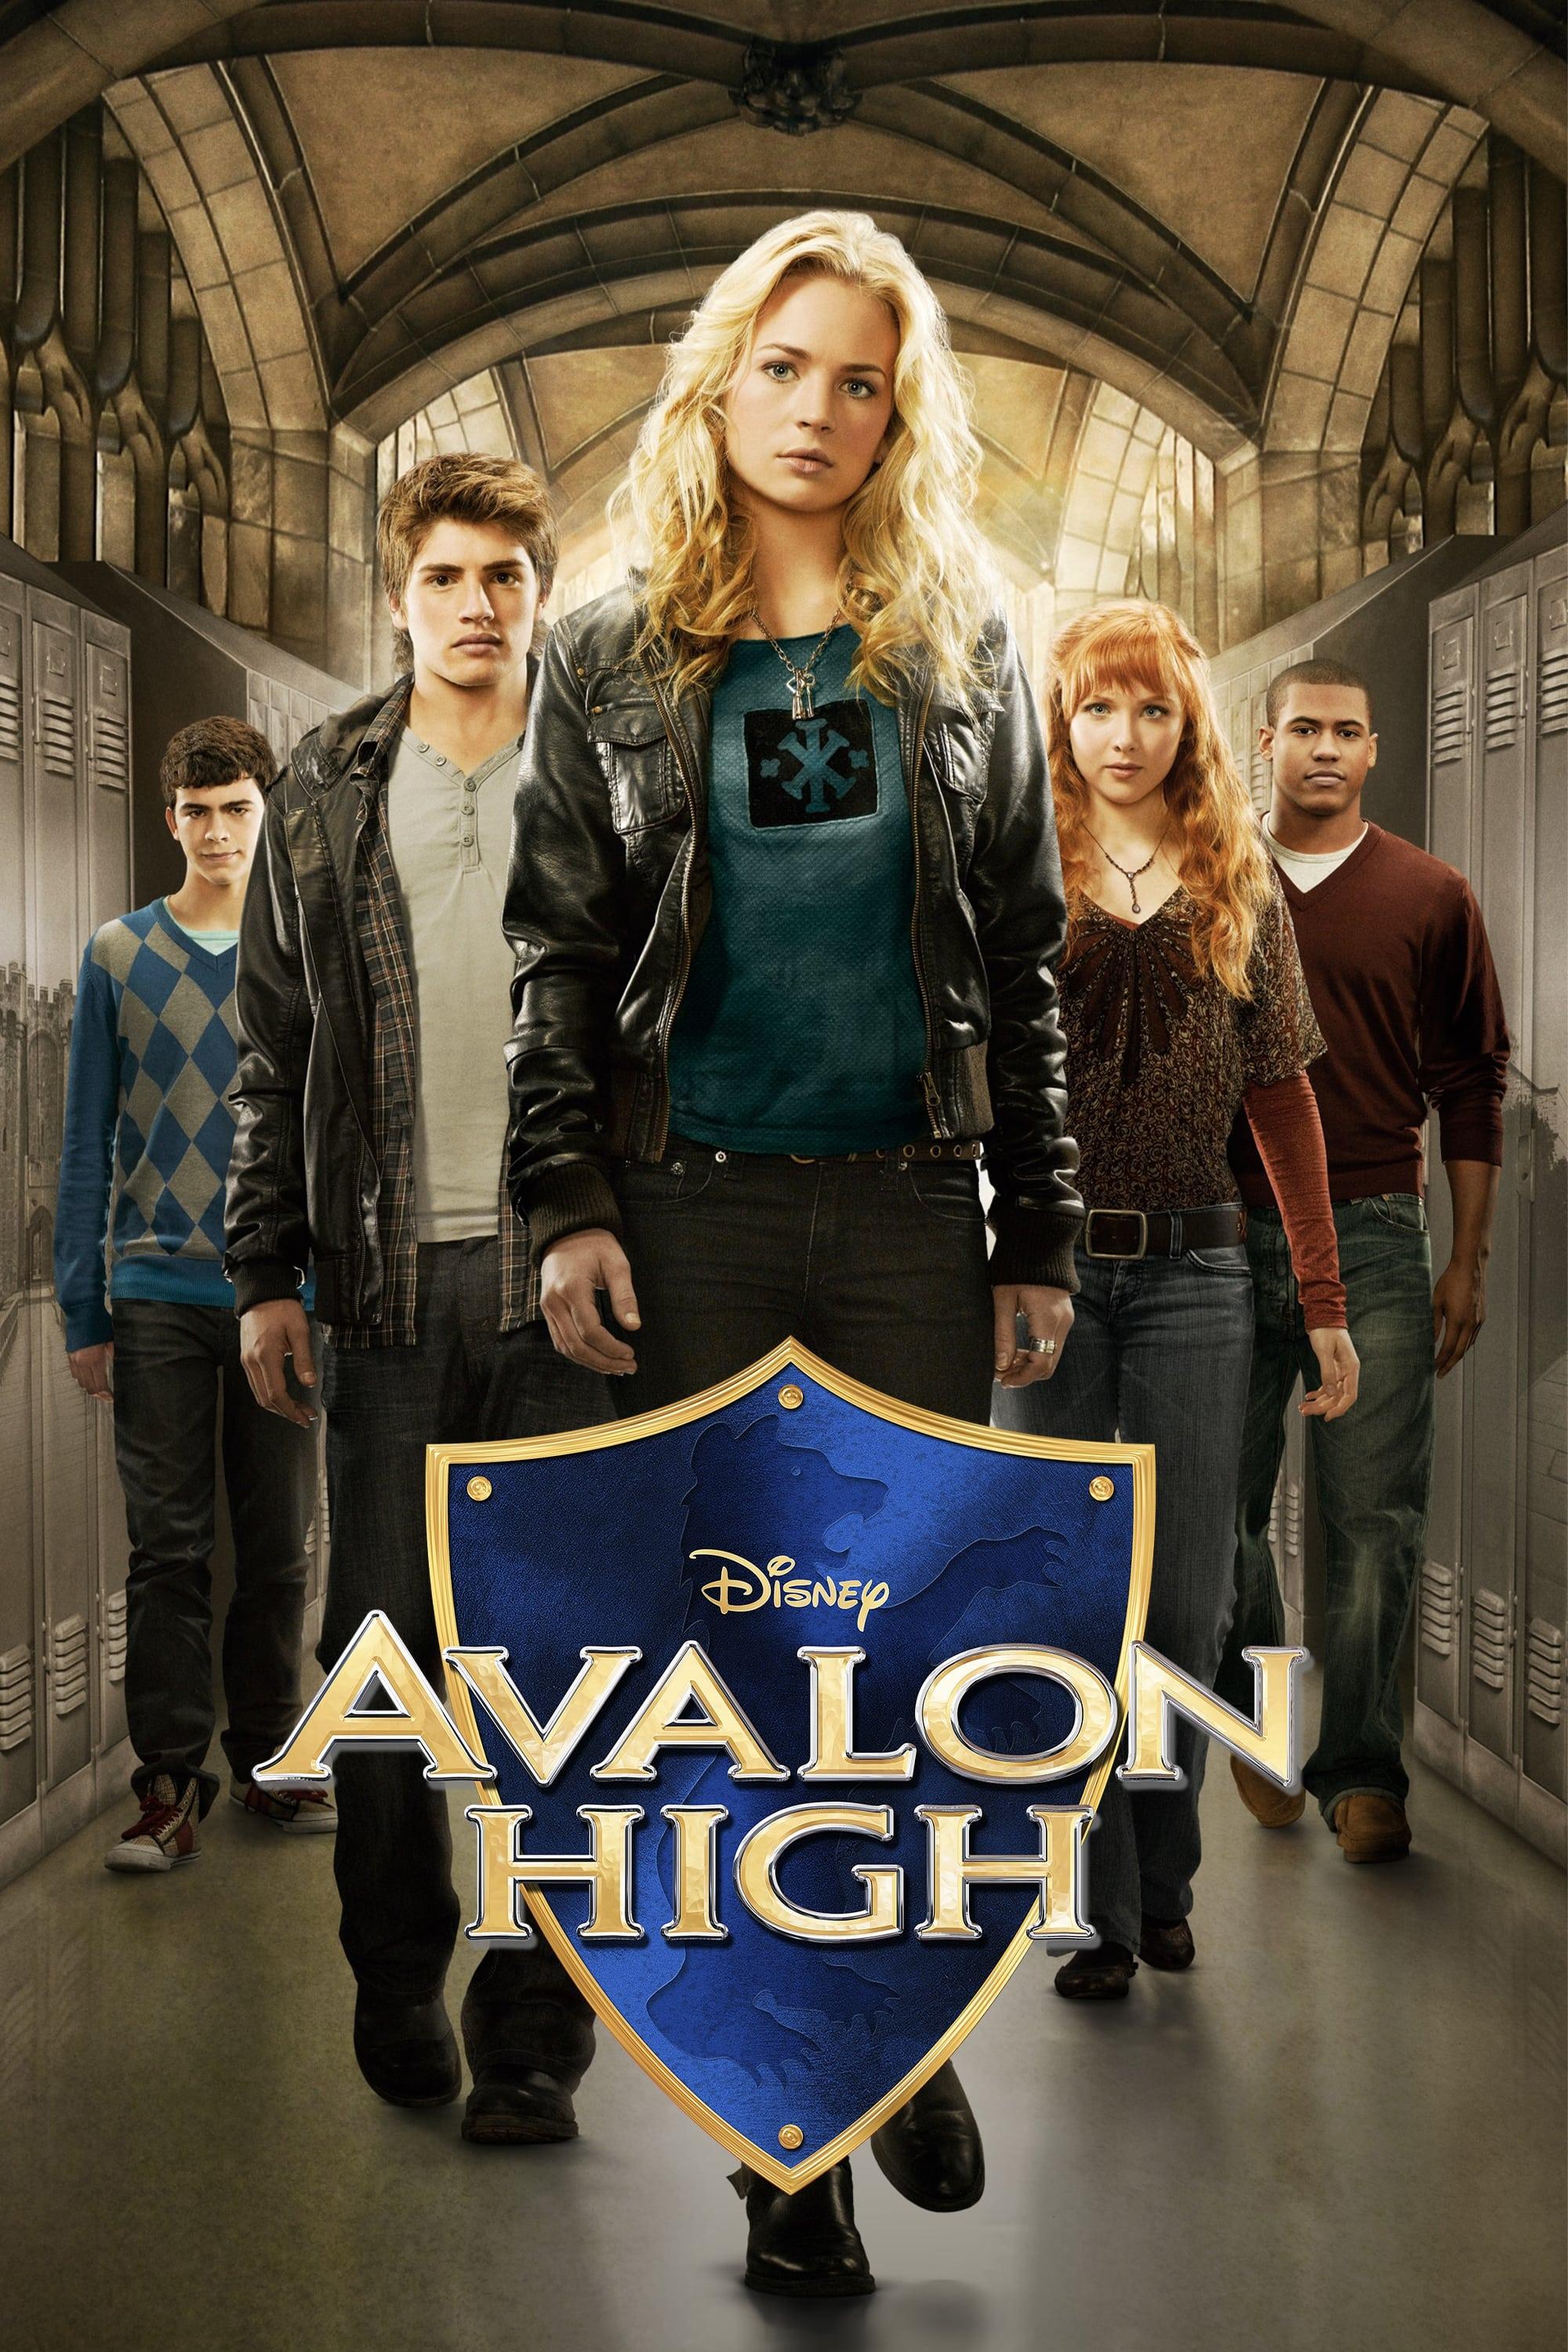 Avalon High poster